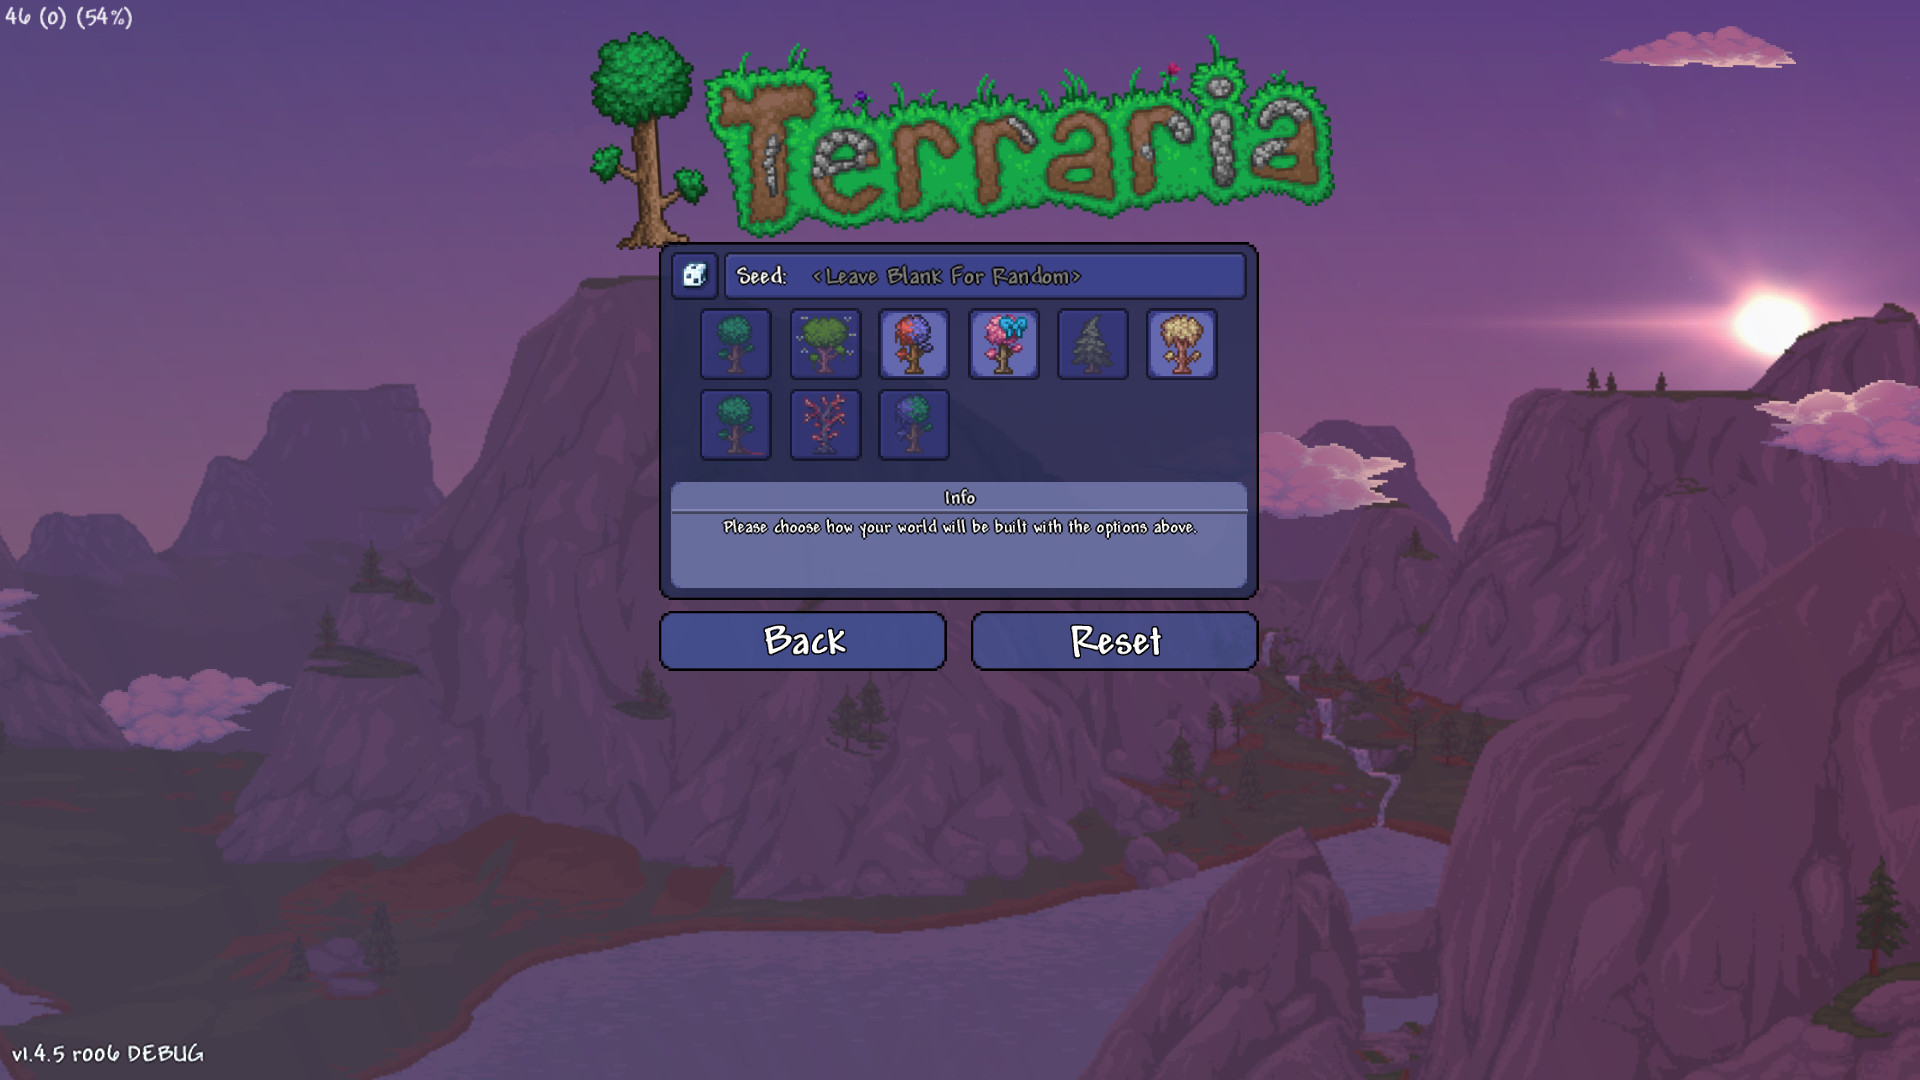 Terraria 1.4.5 update buries even more secrets in its challenge seeds